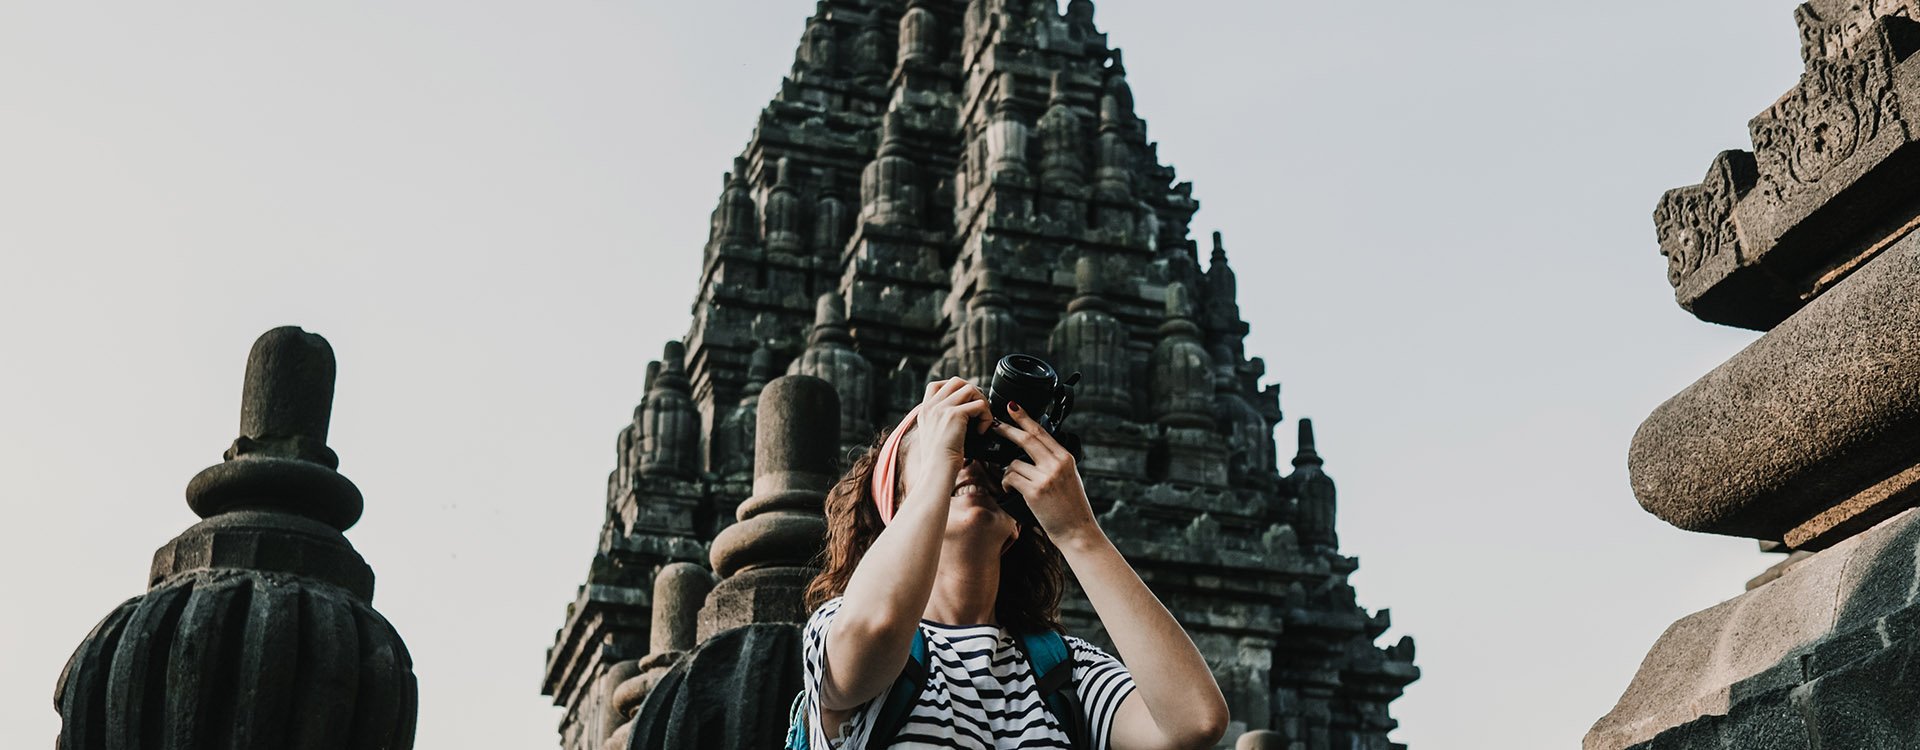 Upwards shot of woman photographing Prambanan Temple, Java